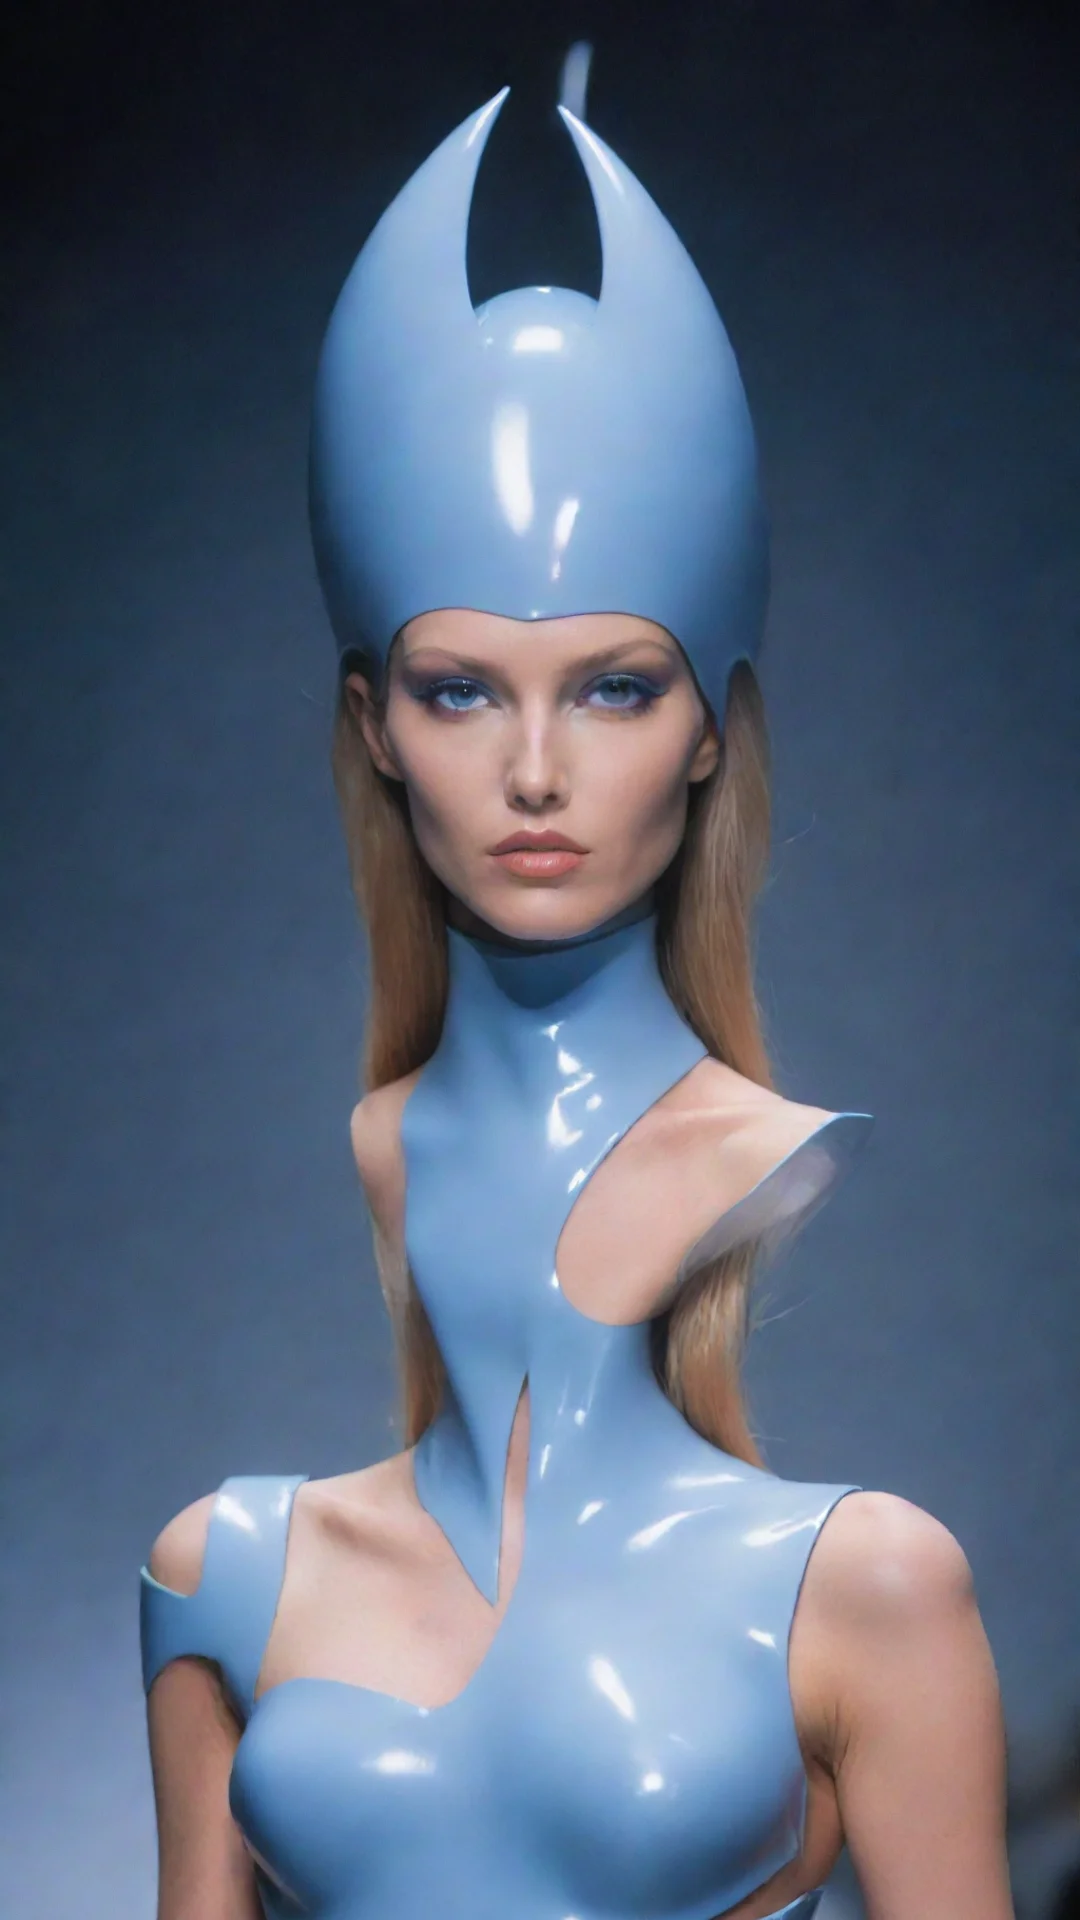 aiamazing thierry mugler fashion style futuristic model awesome portrait 2 tall